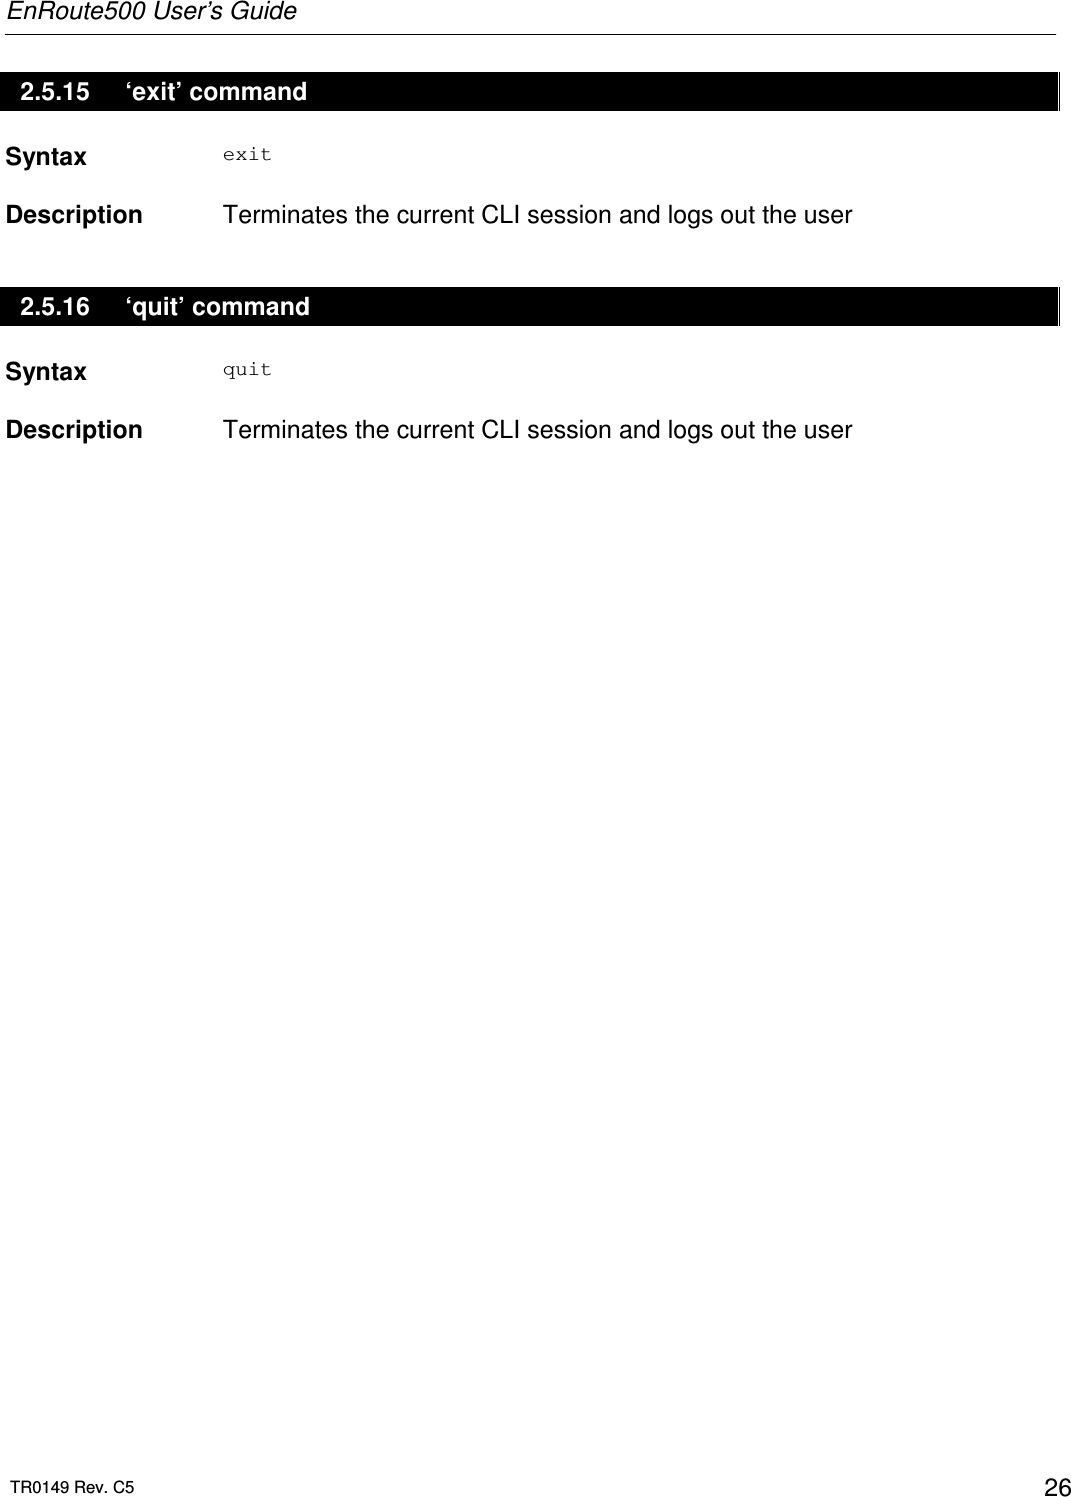 EnRoute500 User’s Guide  TR0149 Rev. C5  26 2.5.15  ‘exit’ command Syntax  exit   Description   Terminates the current CLI session and logs out the user 2.5.16  ‘quit’ command Syntax  quit   Description   Terminates the current CLI session and logs out the user 